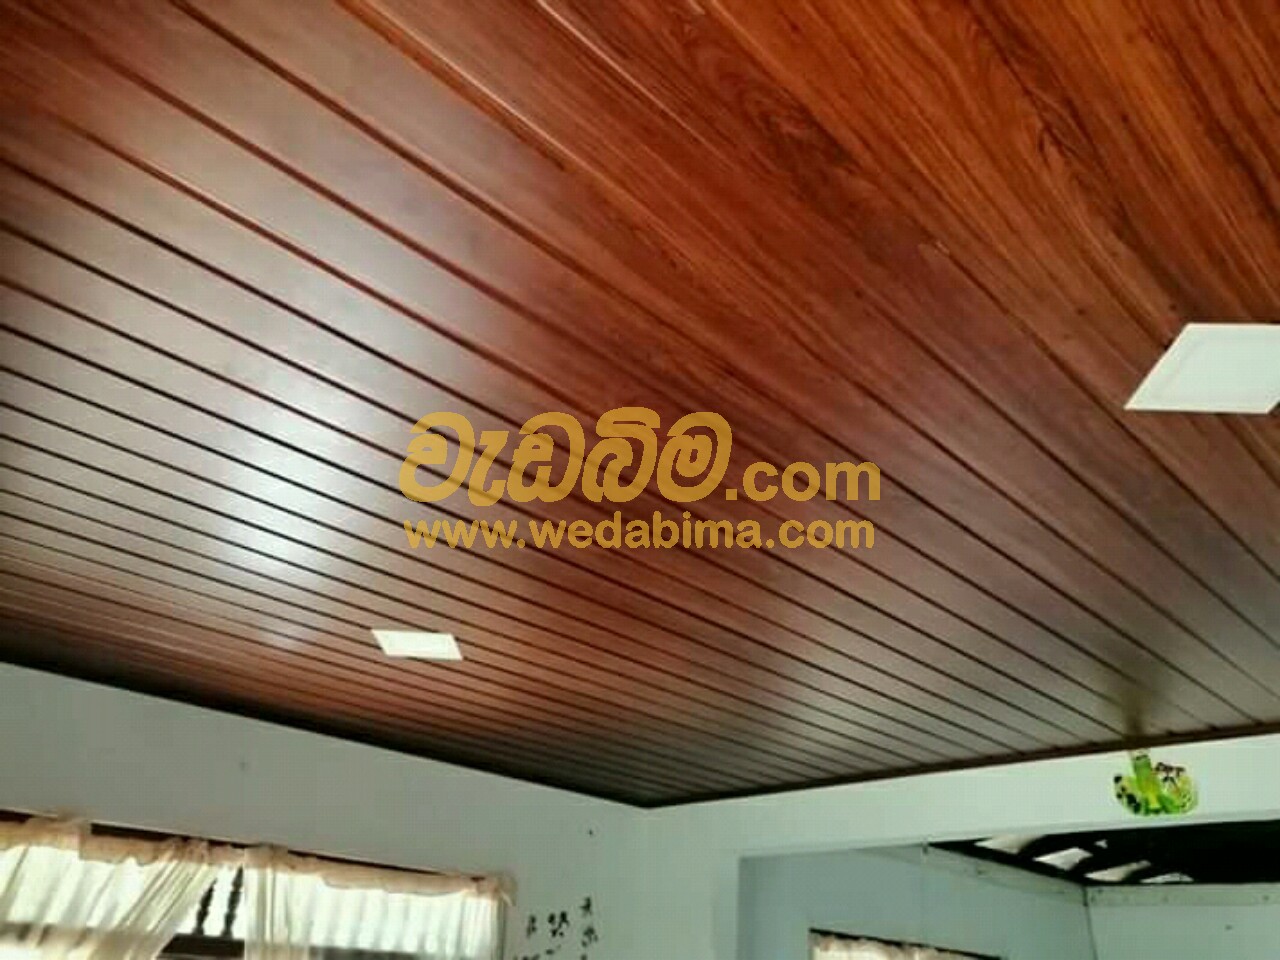 IPanel Ceiling Design in Sri Lanka